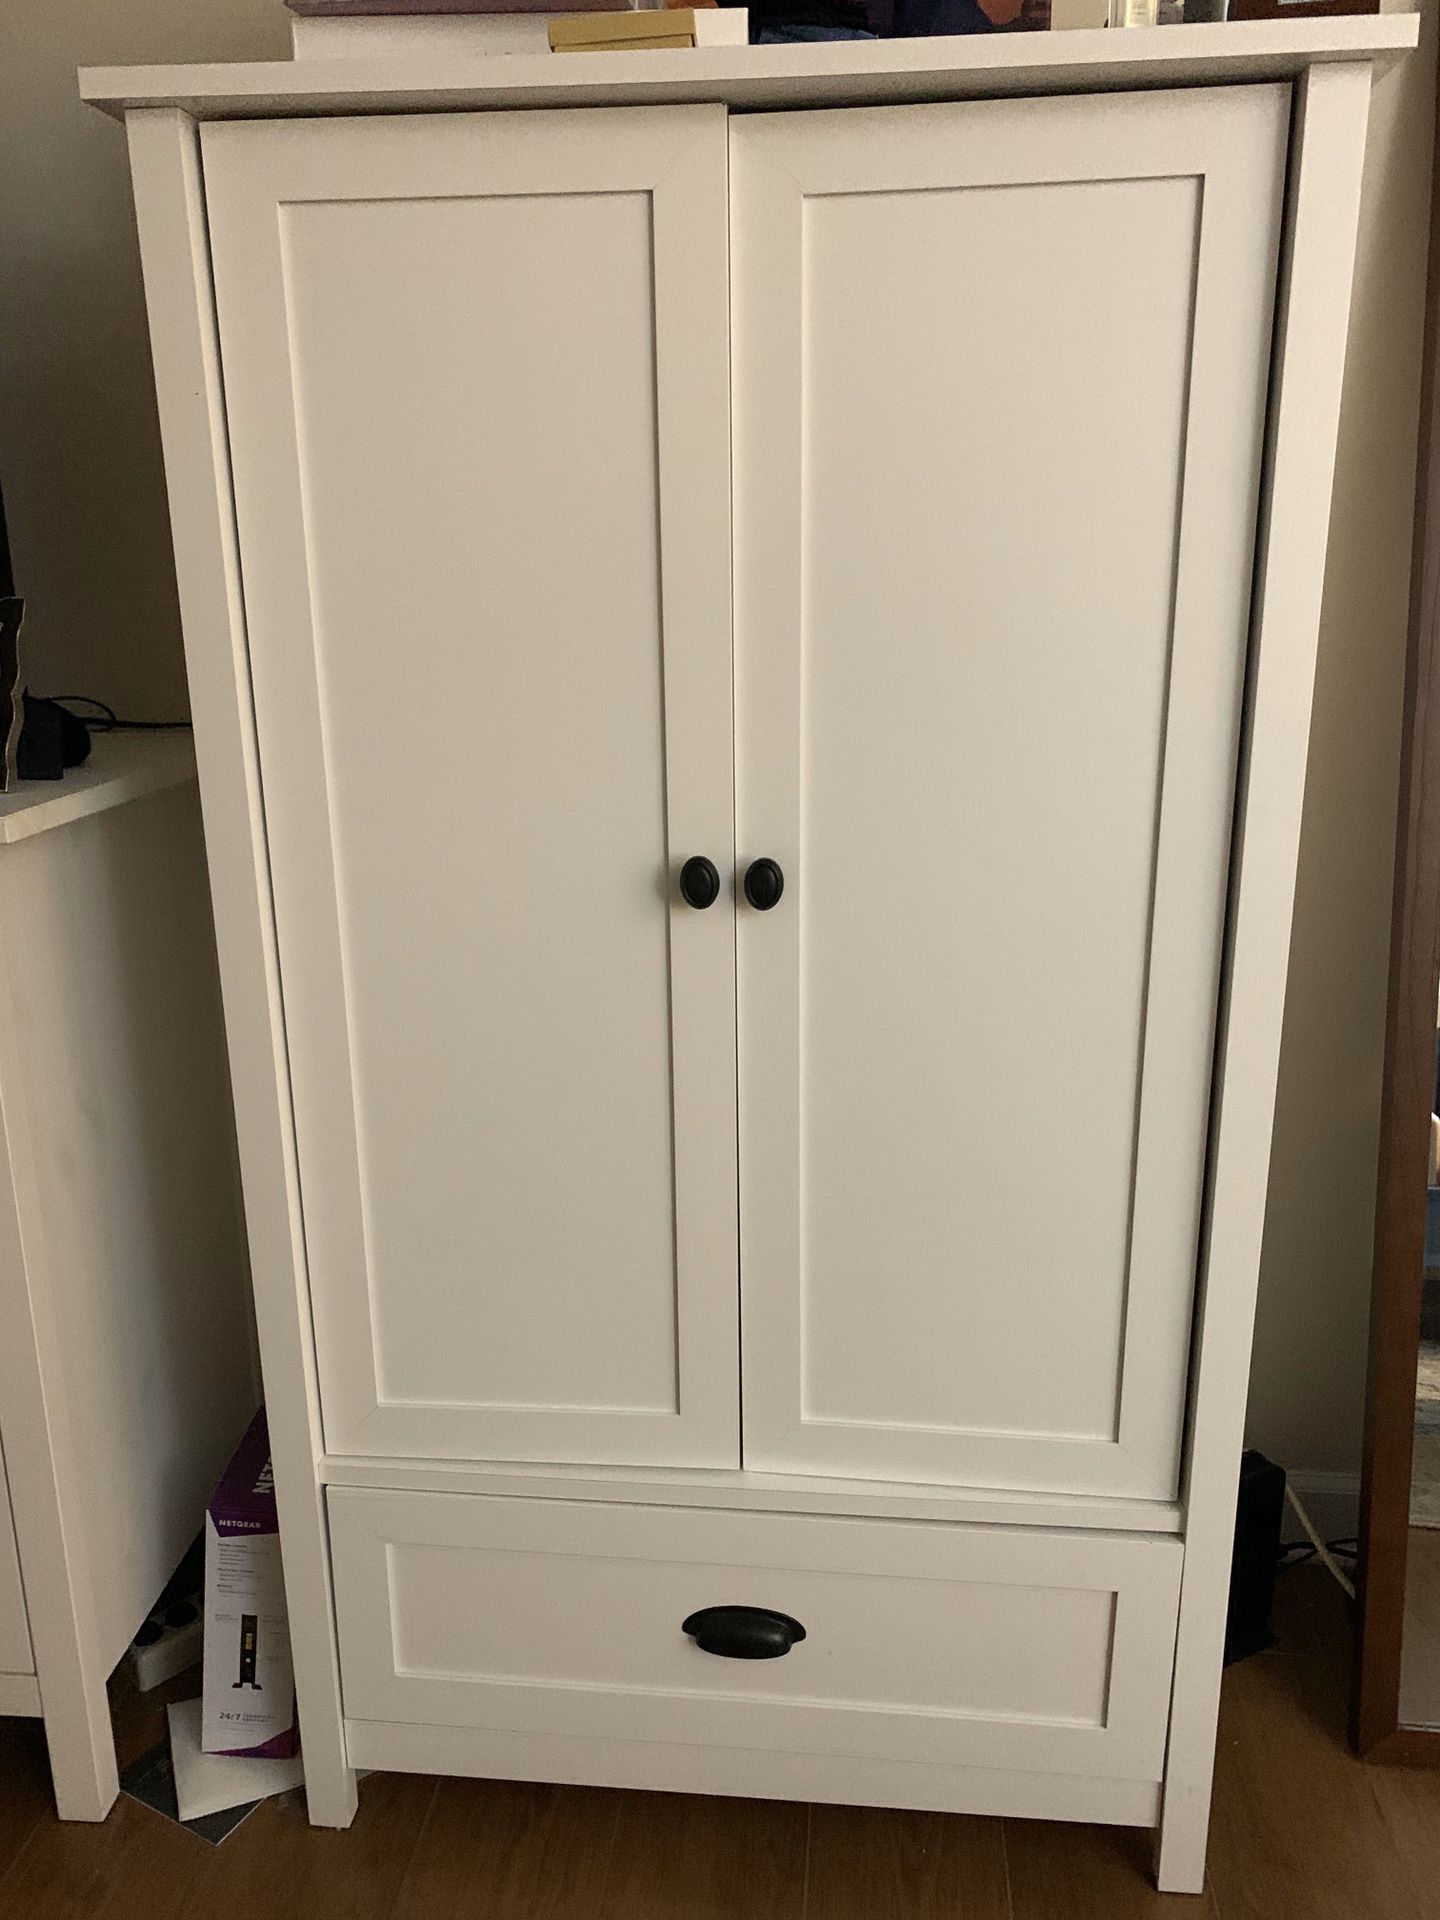 Large white dresser with shelves